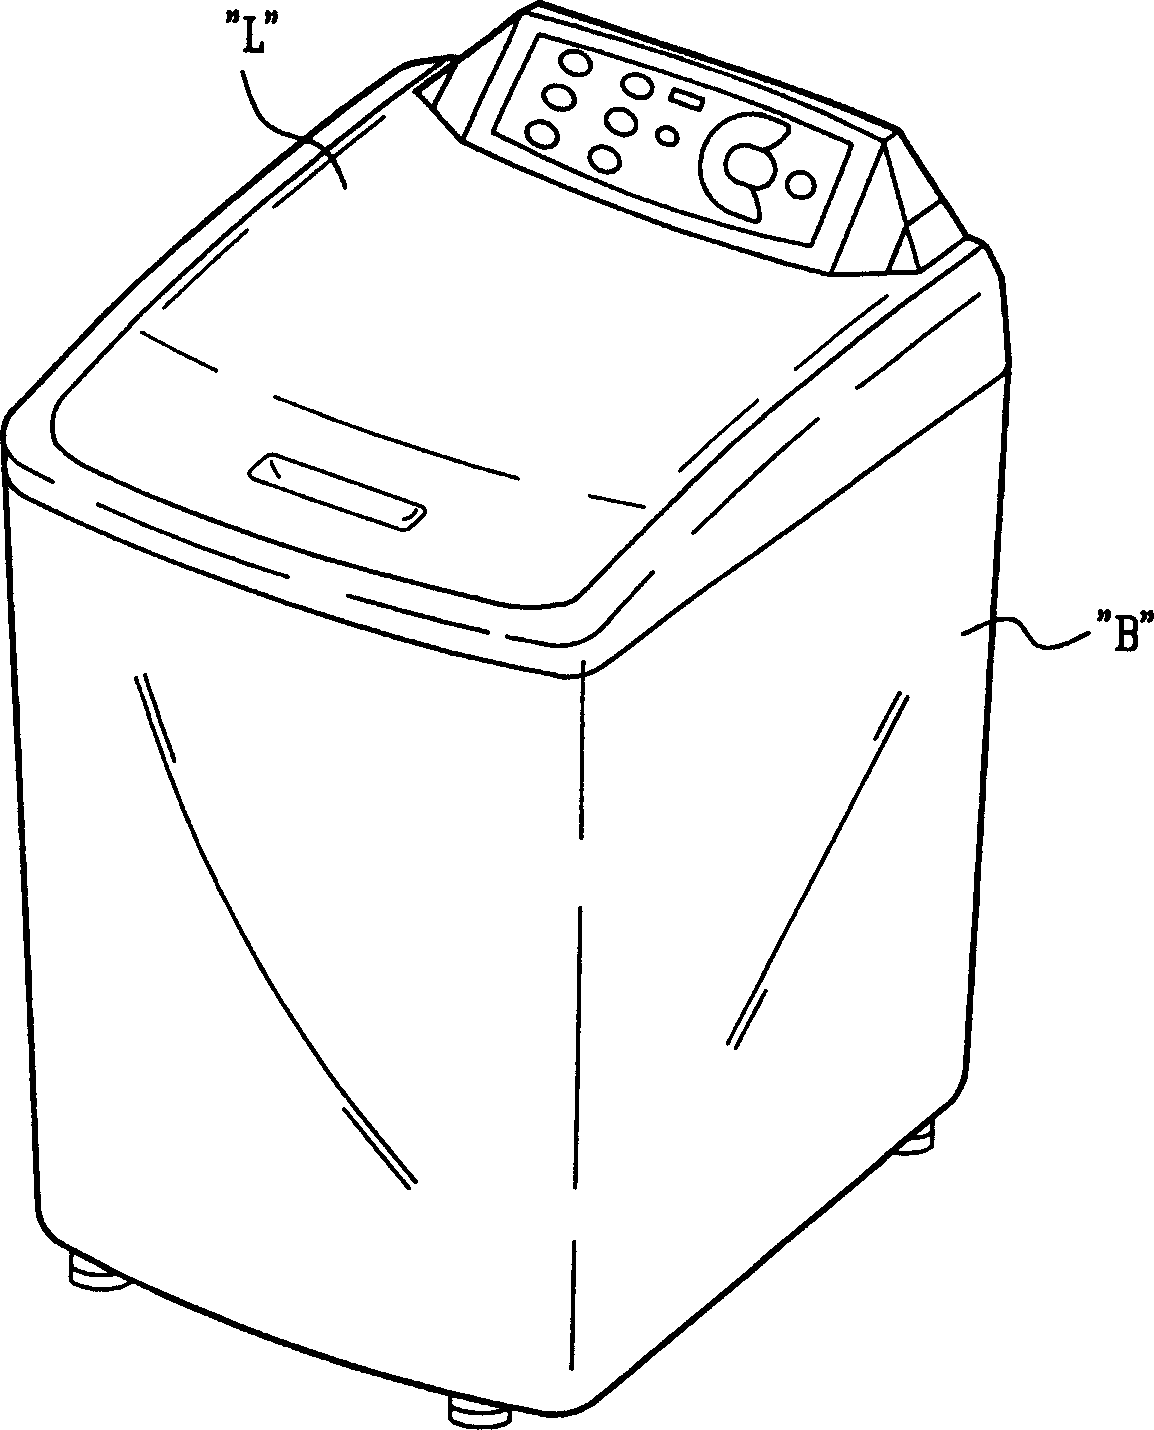 Cover locking device of washing machine